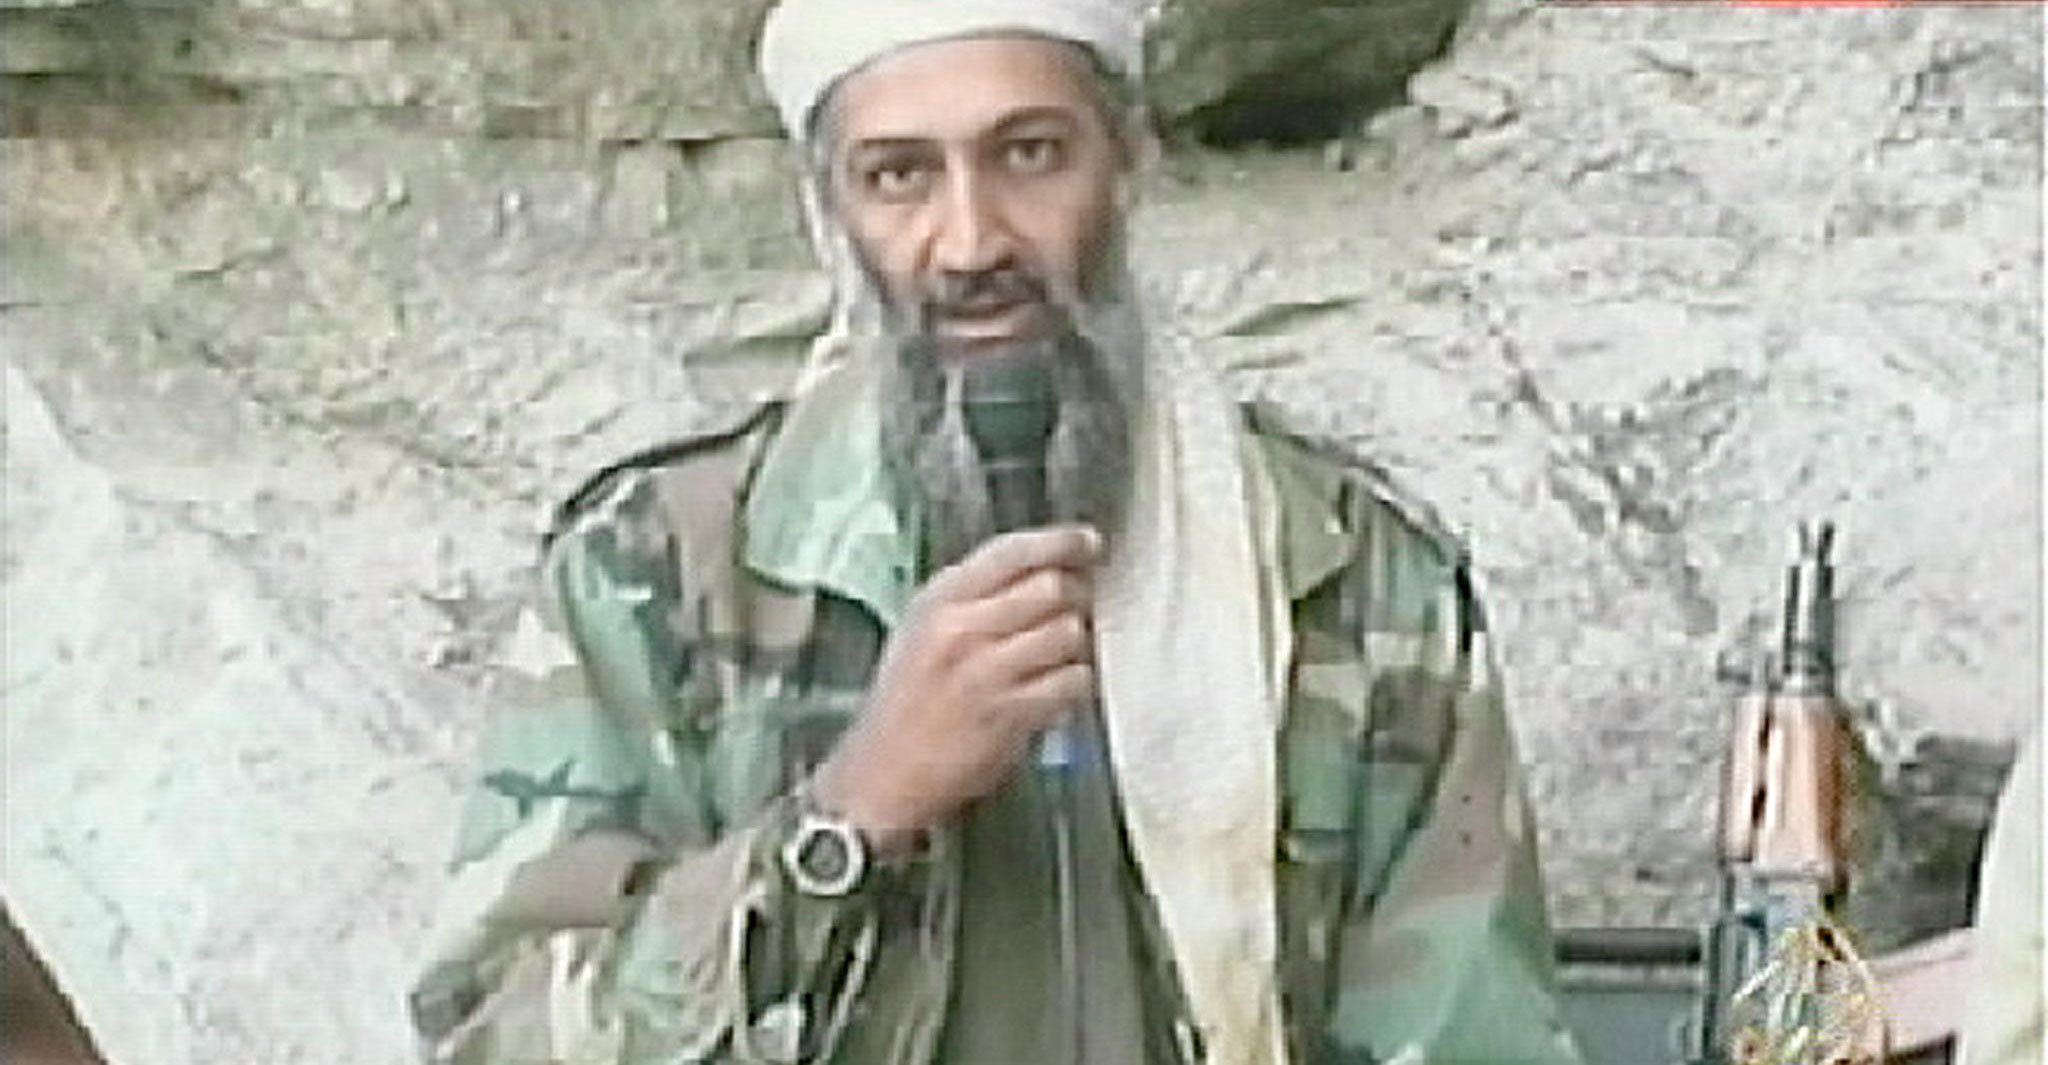 Useful Idiots Resurrect Bin Laden's Anti-American Propaganda, Aided and Abetted by TikTok